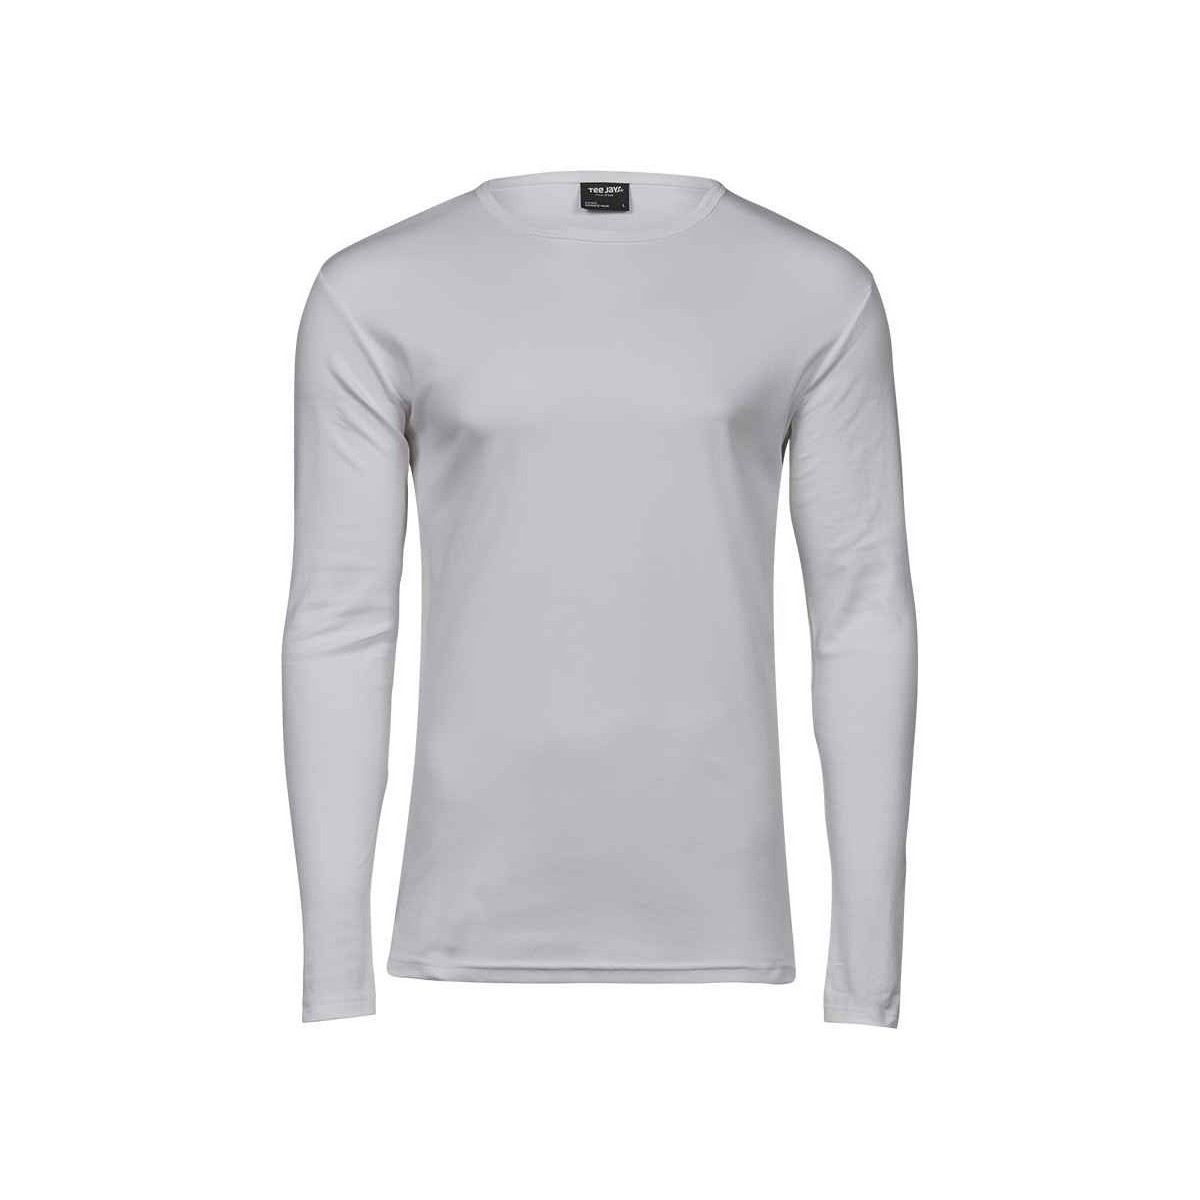 Vêtements Homme T-shirts manches longues Tee Jays Interlock Blanc